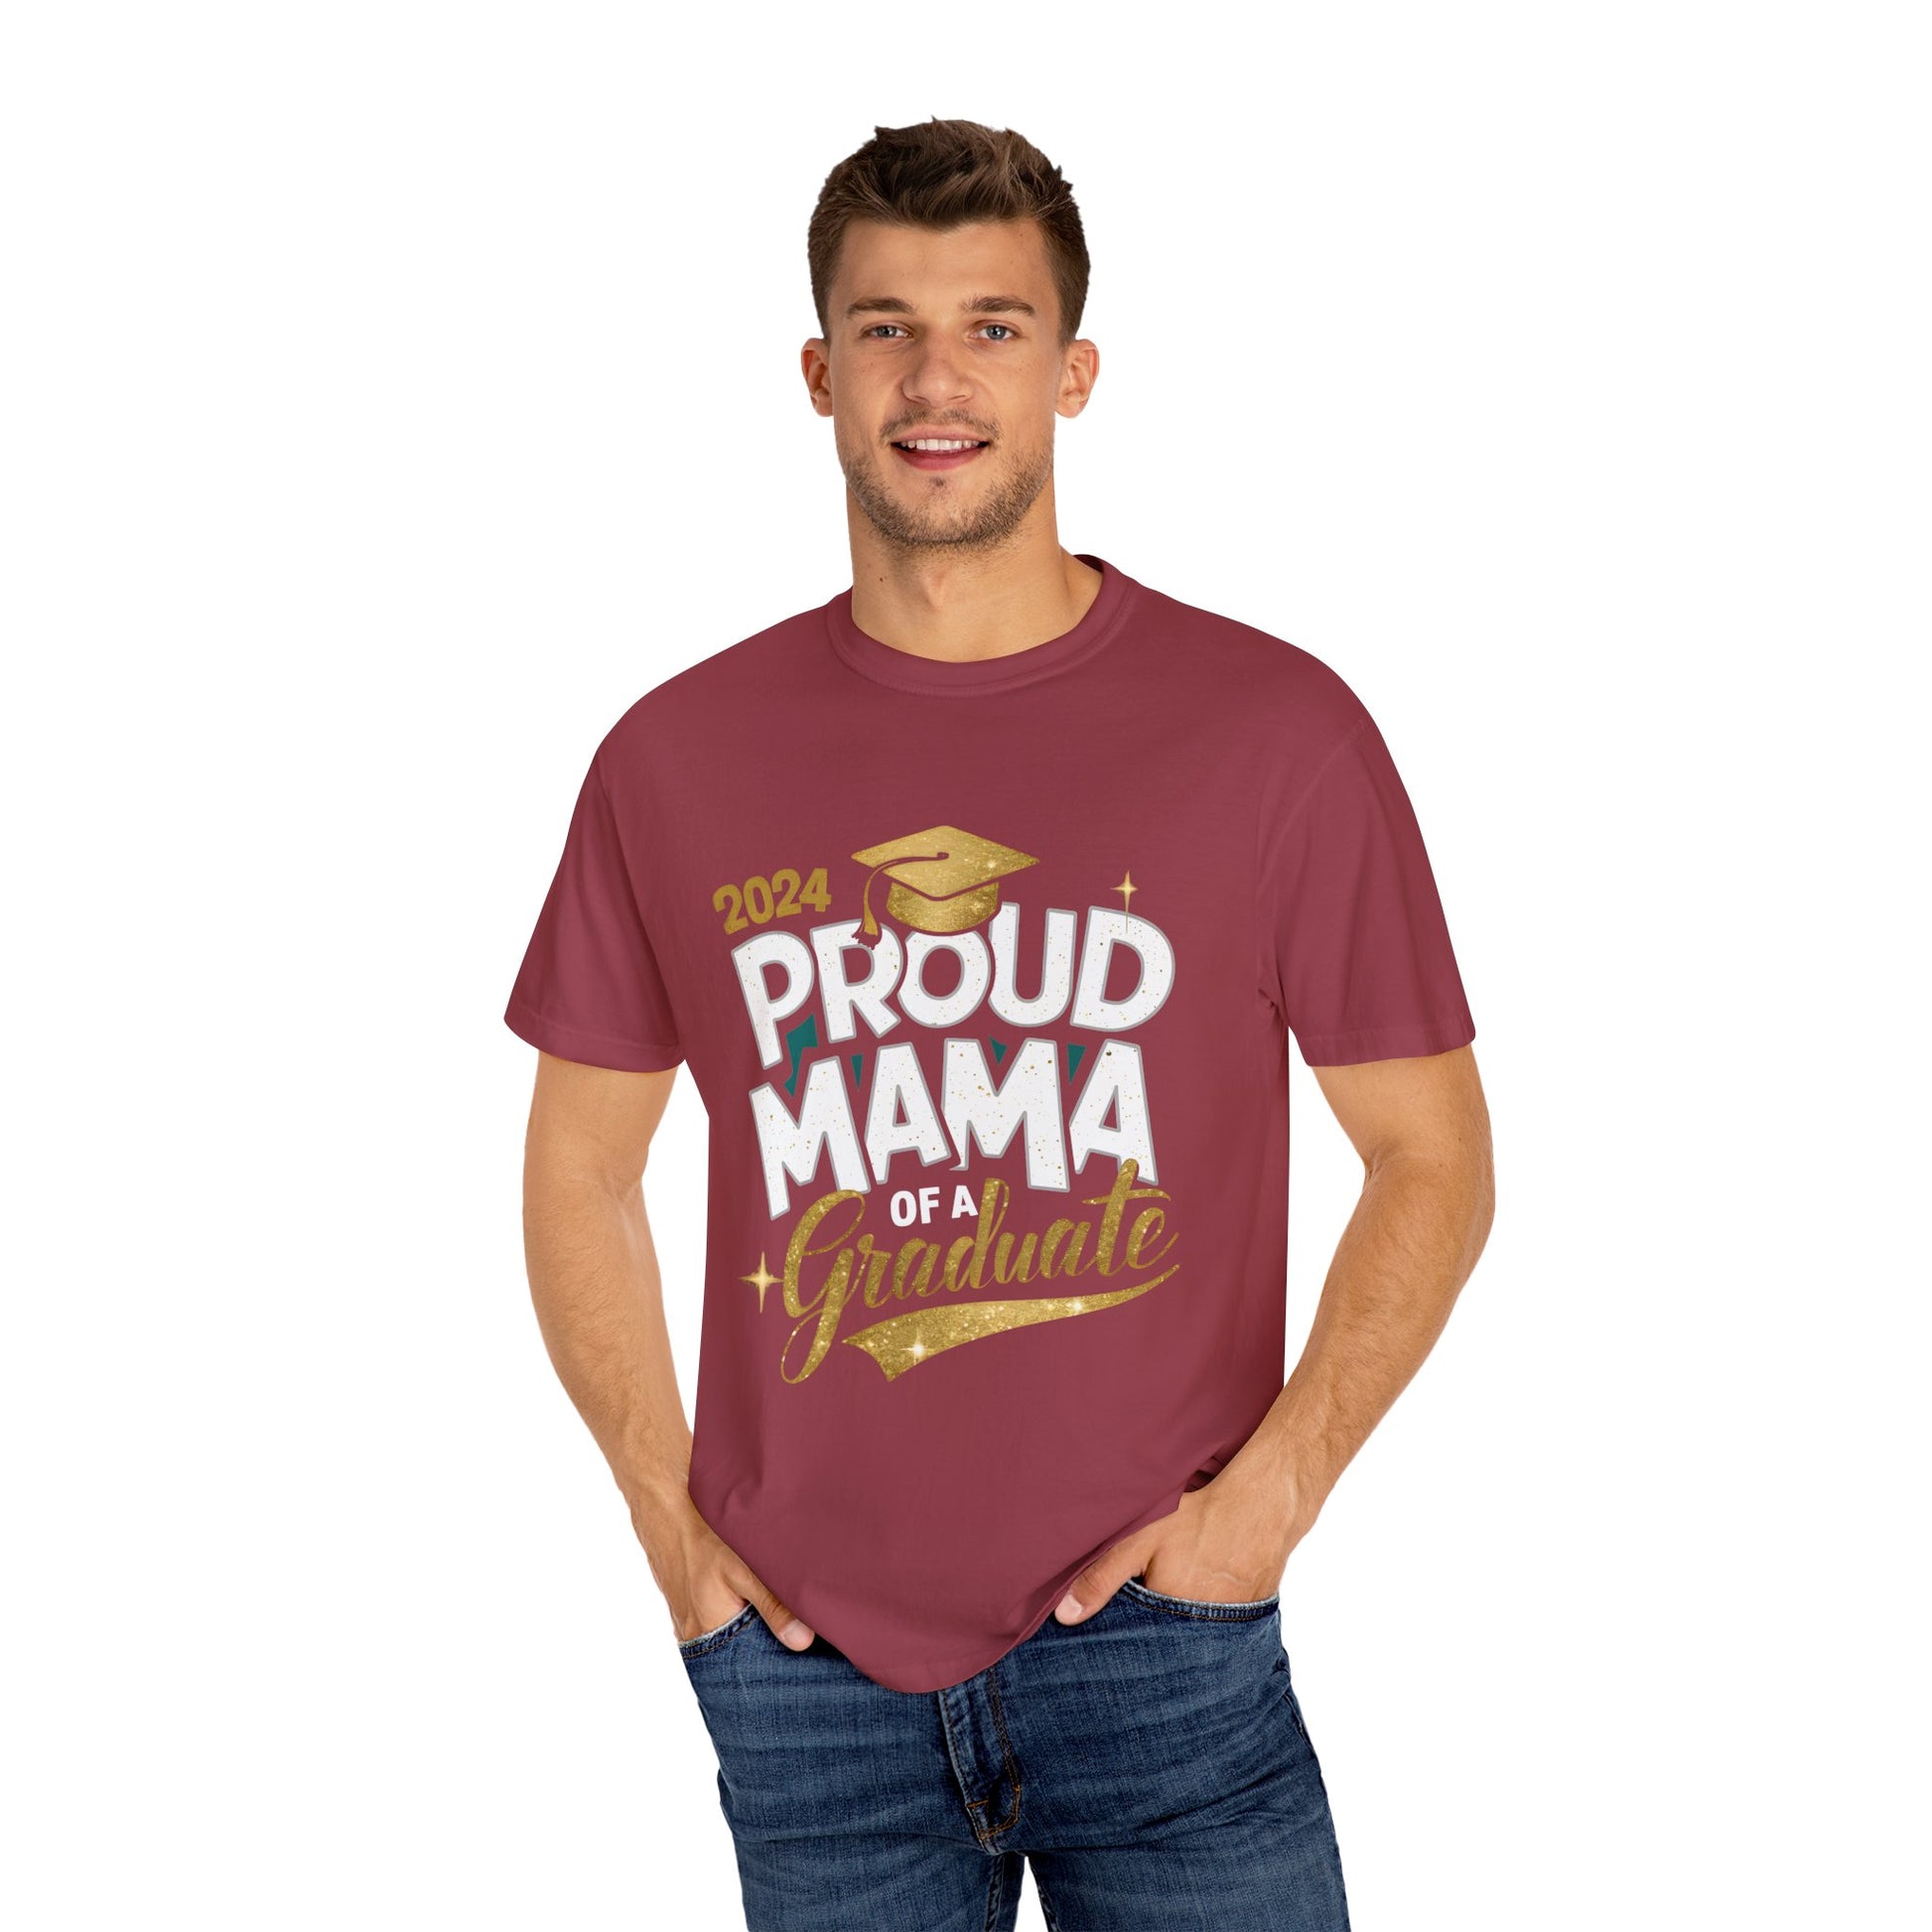 Proud Mama of a 2024 Graduate Unisex Garment-dyed T-shirt Cotton Funny Humorous Graphic Soft Premium Unisex Men Women Chili T-shirt Birthday Gift-36